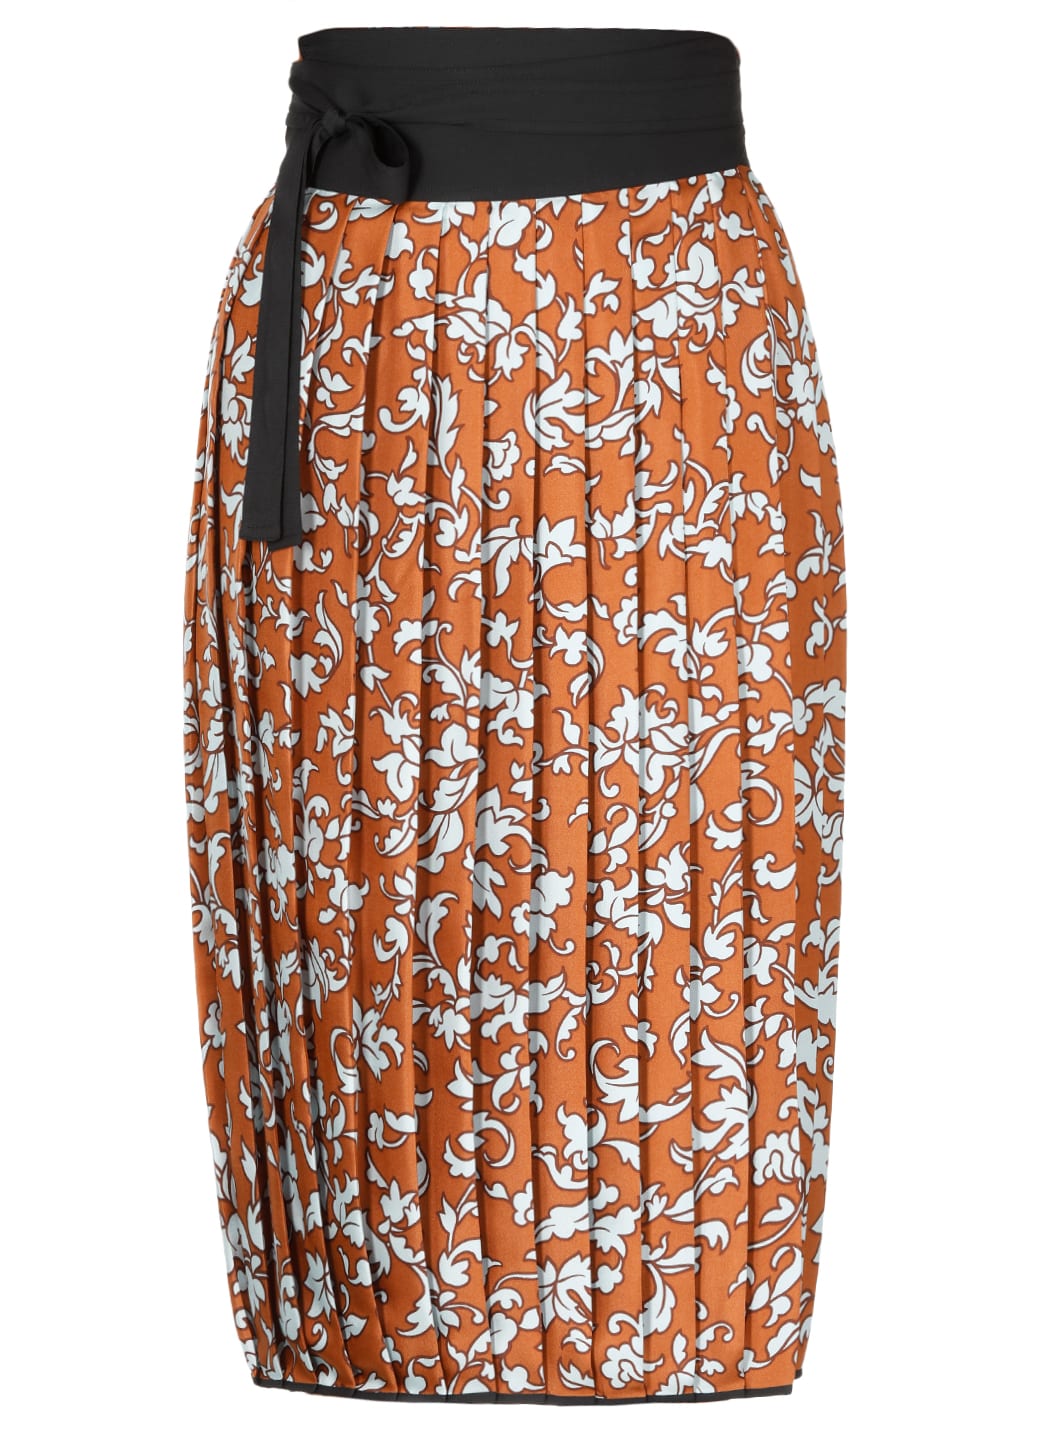 Tory Burch Floral Print Silk Skirt